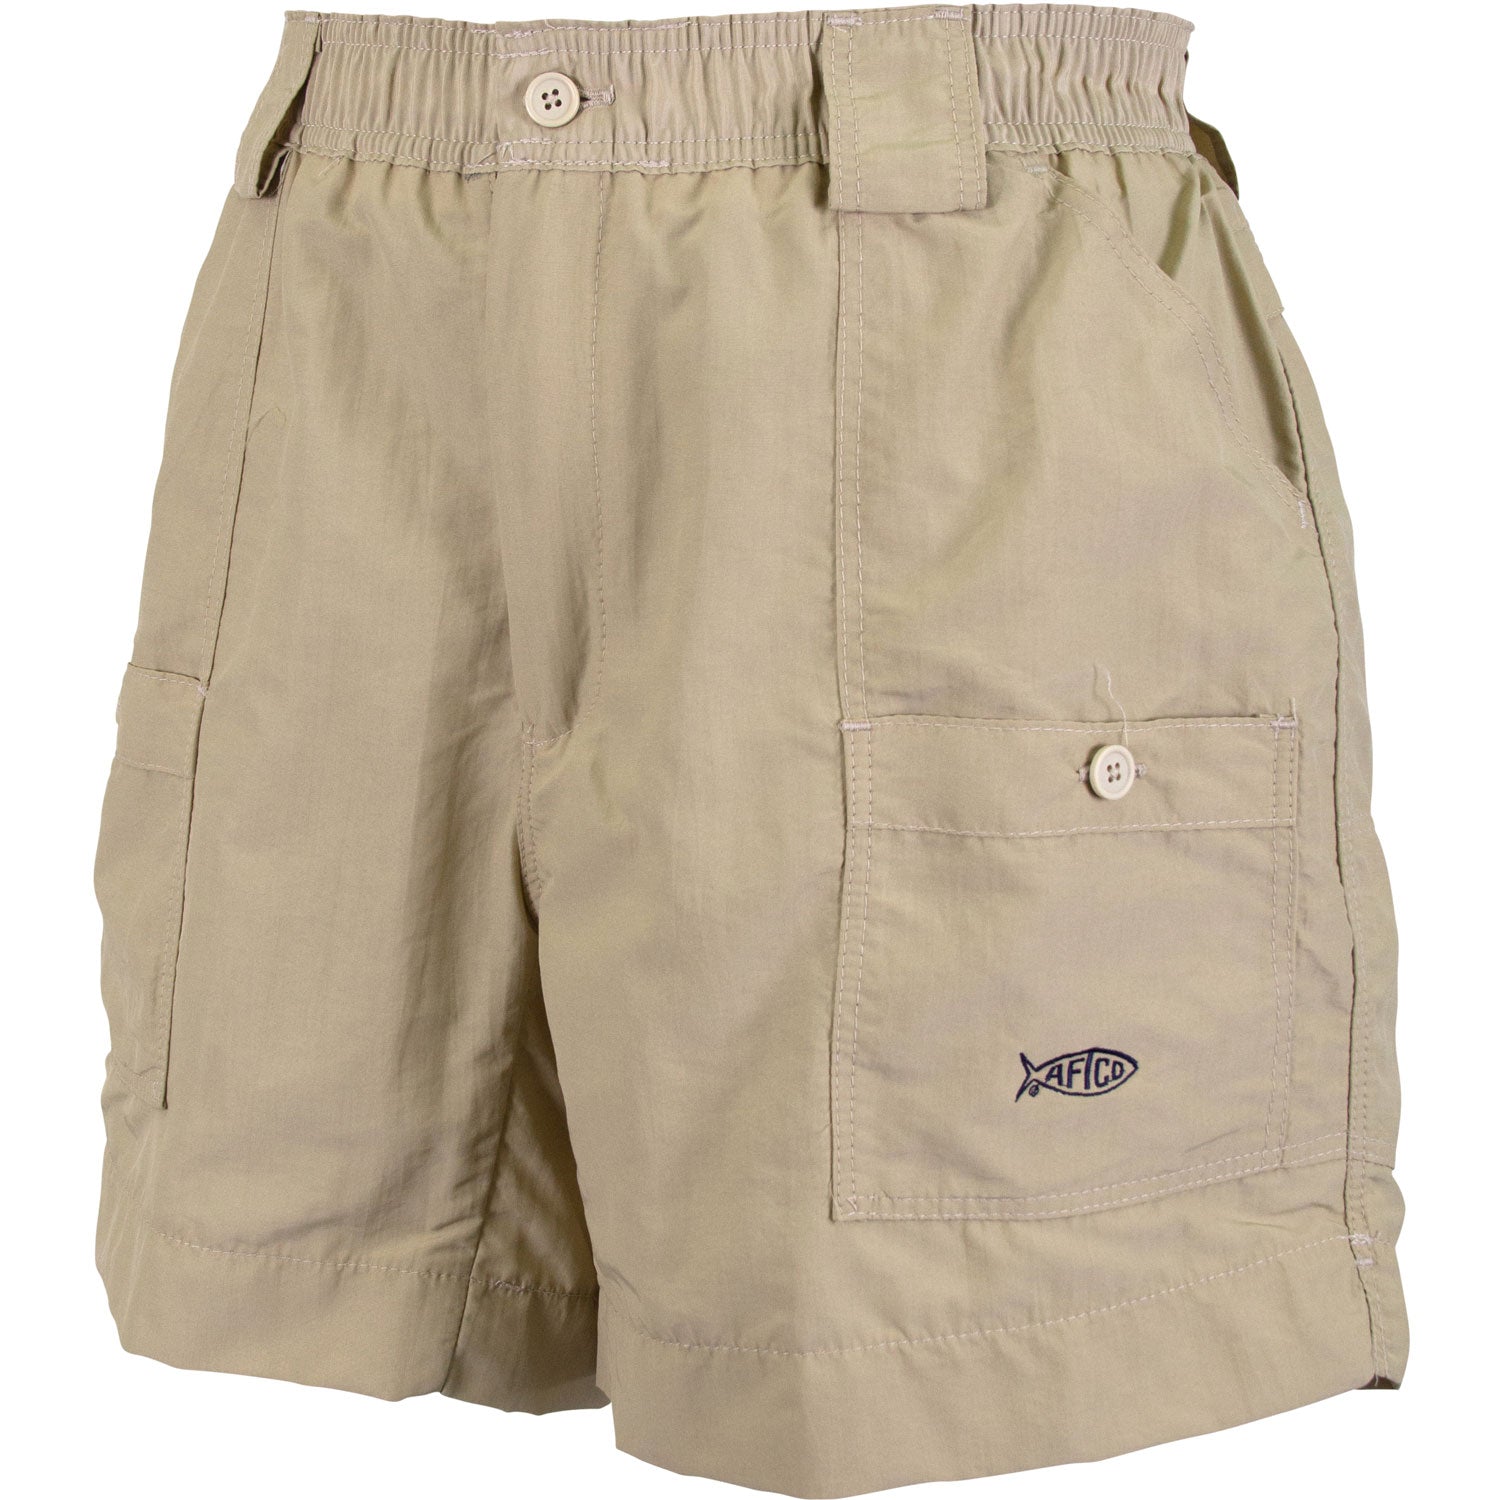 AFTCO Original Fishing Shorts for Men